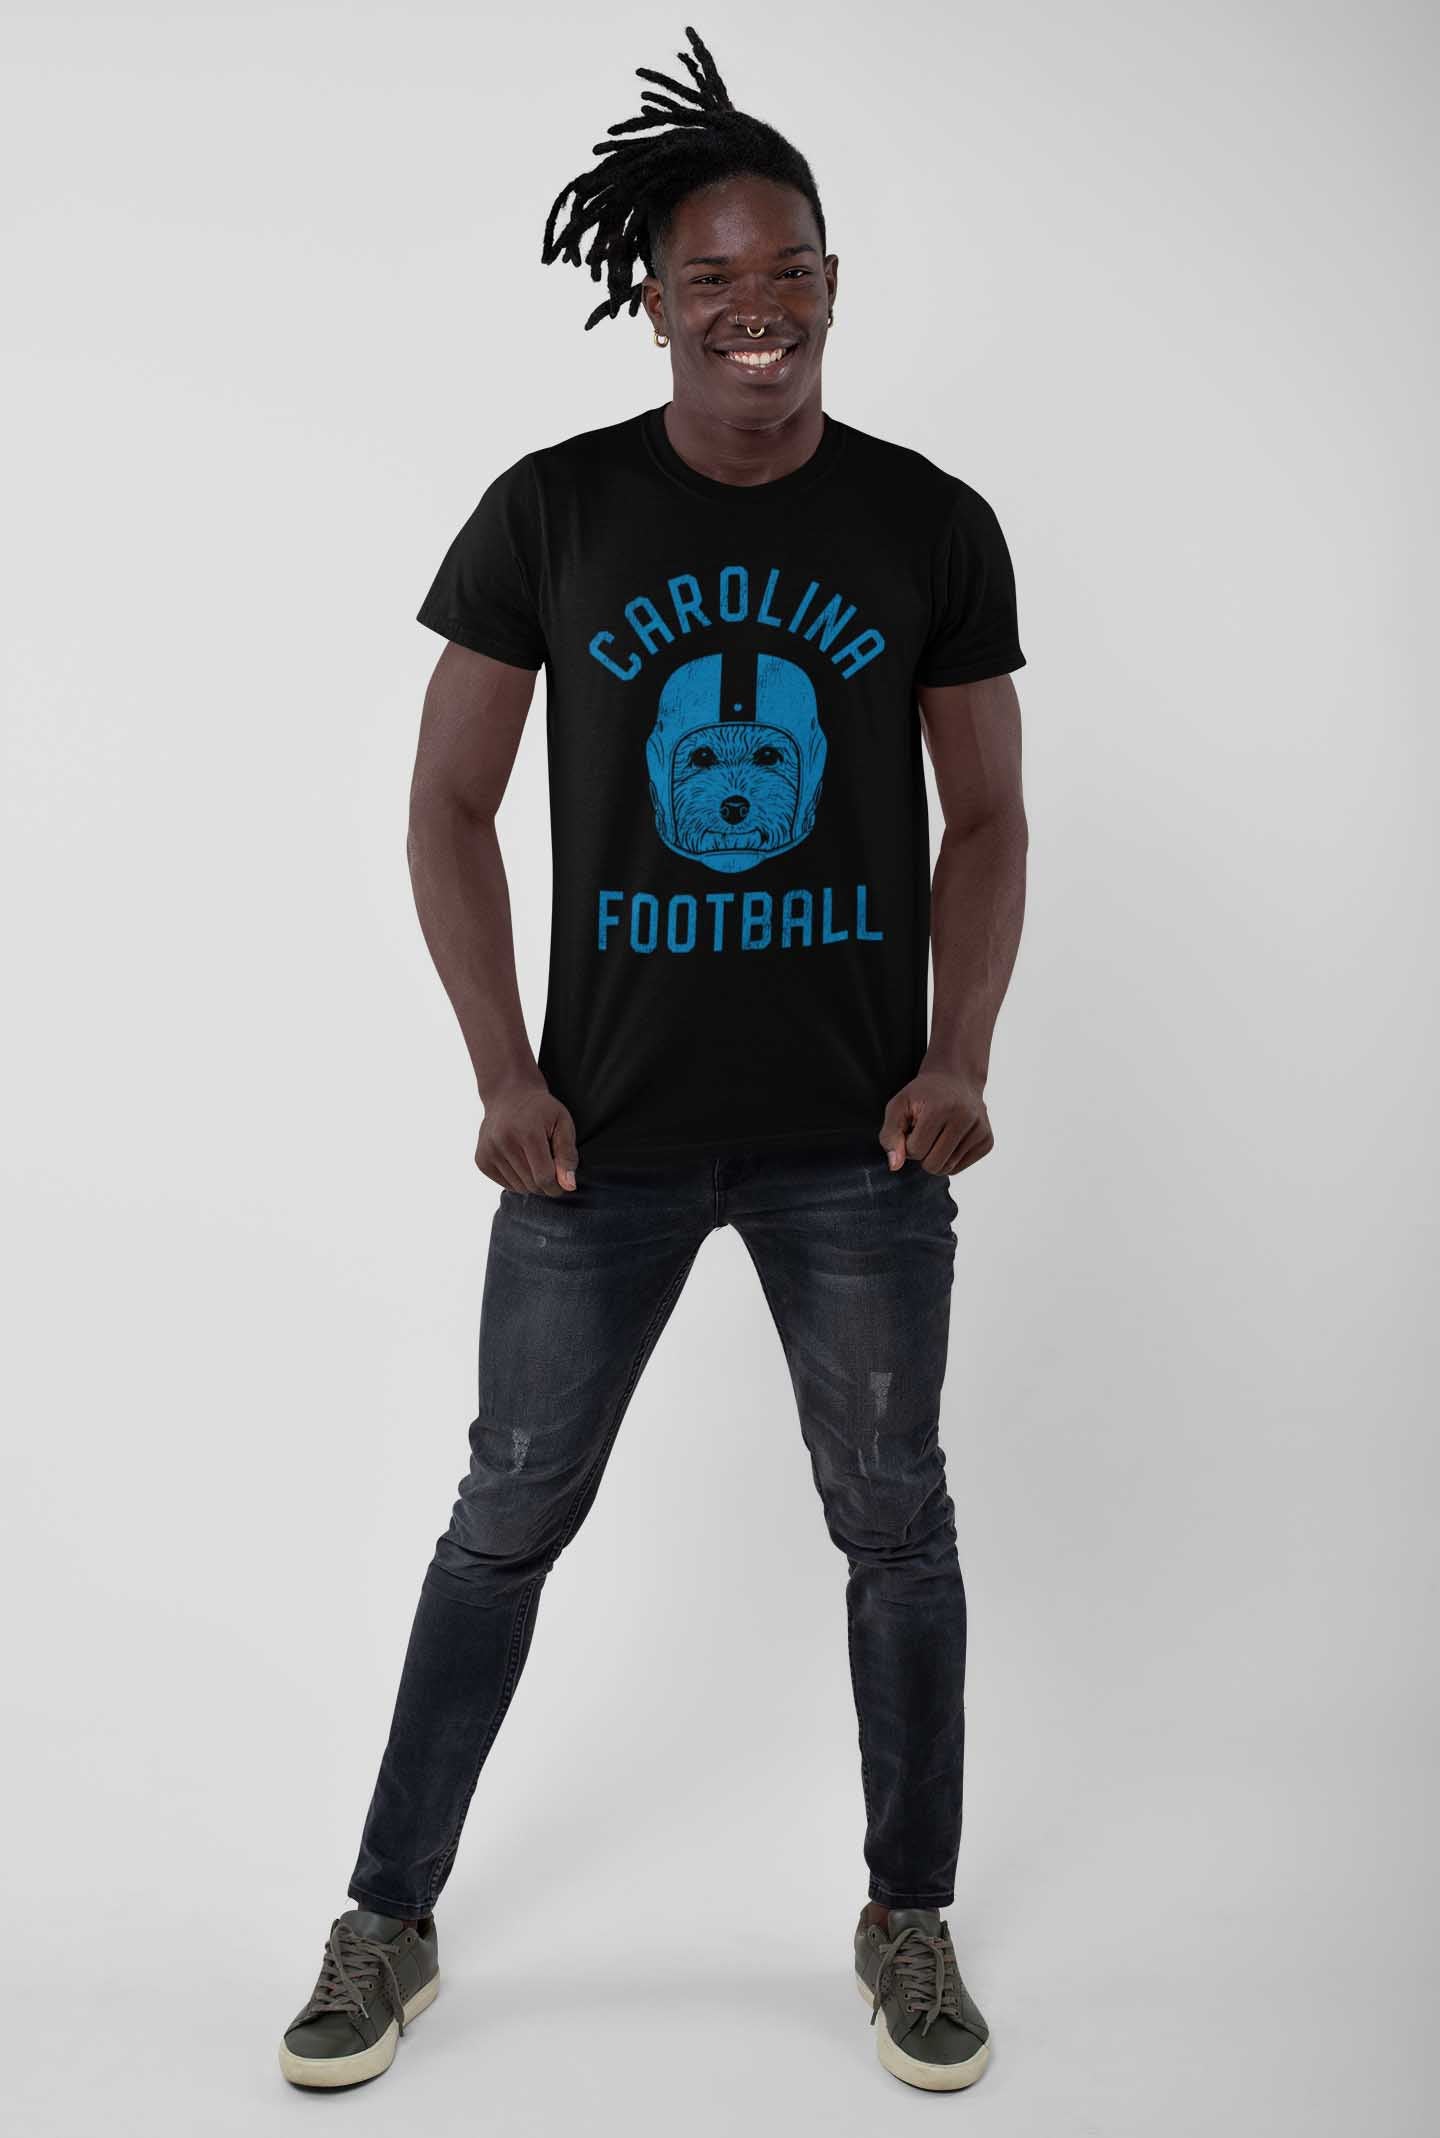 Carolina Football Poodle T-Shirt